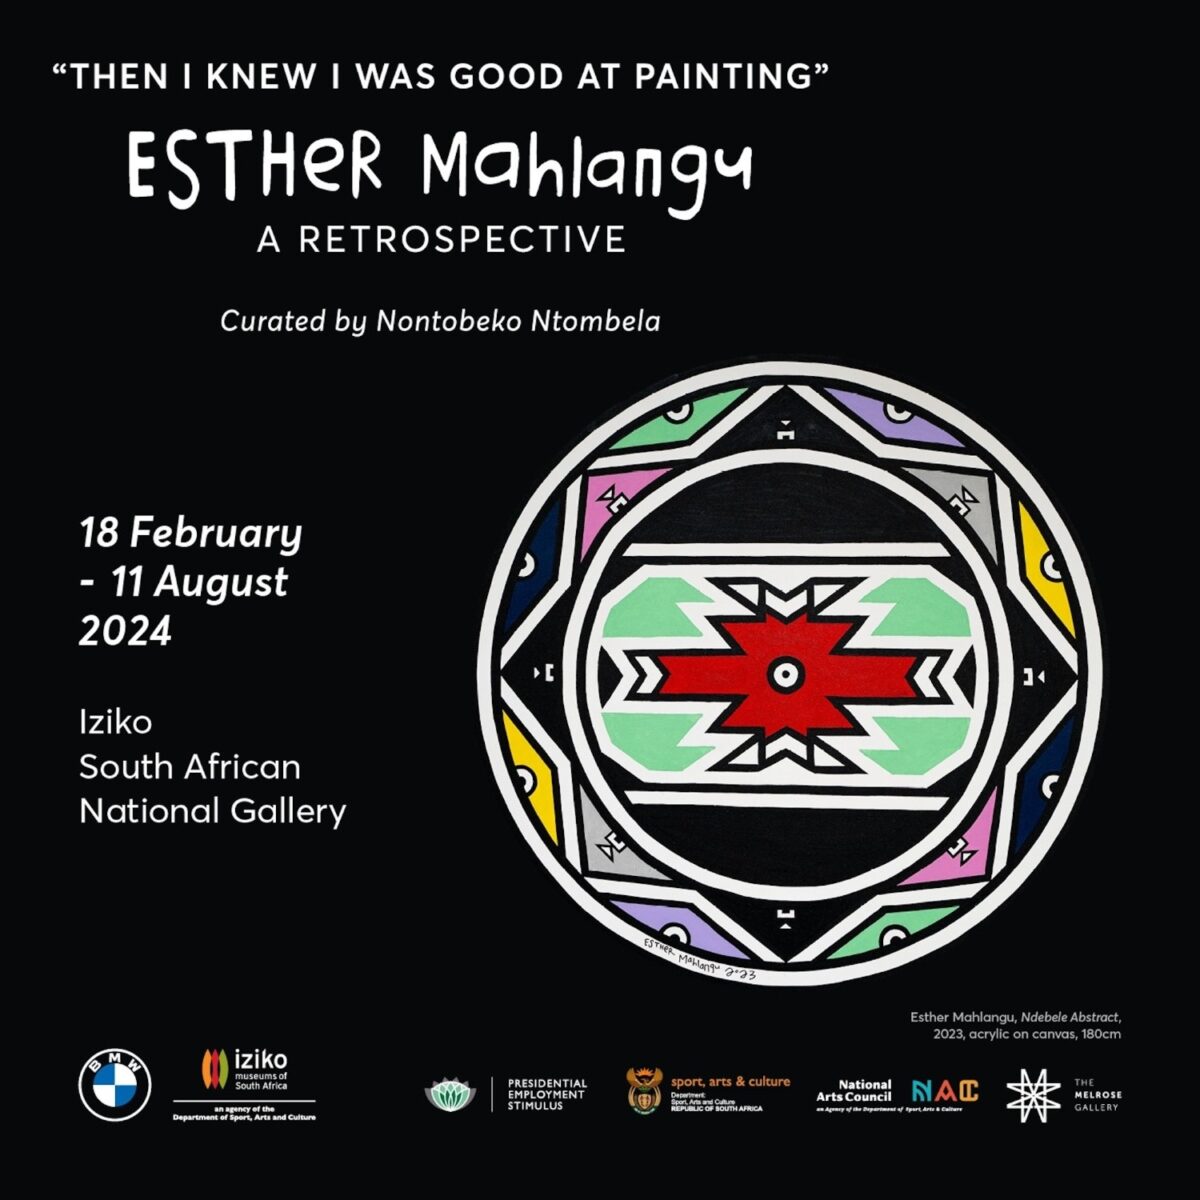 Esther Mahlangu exhibition in Cape Town